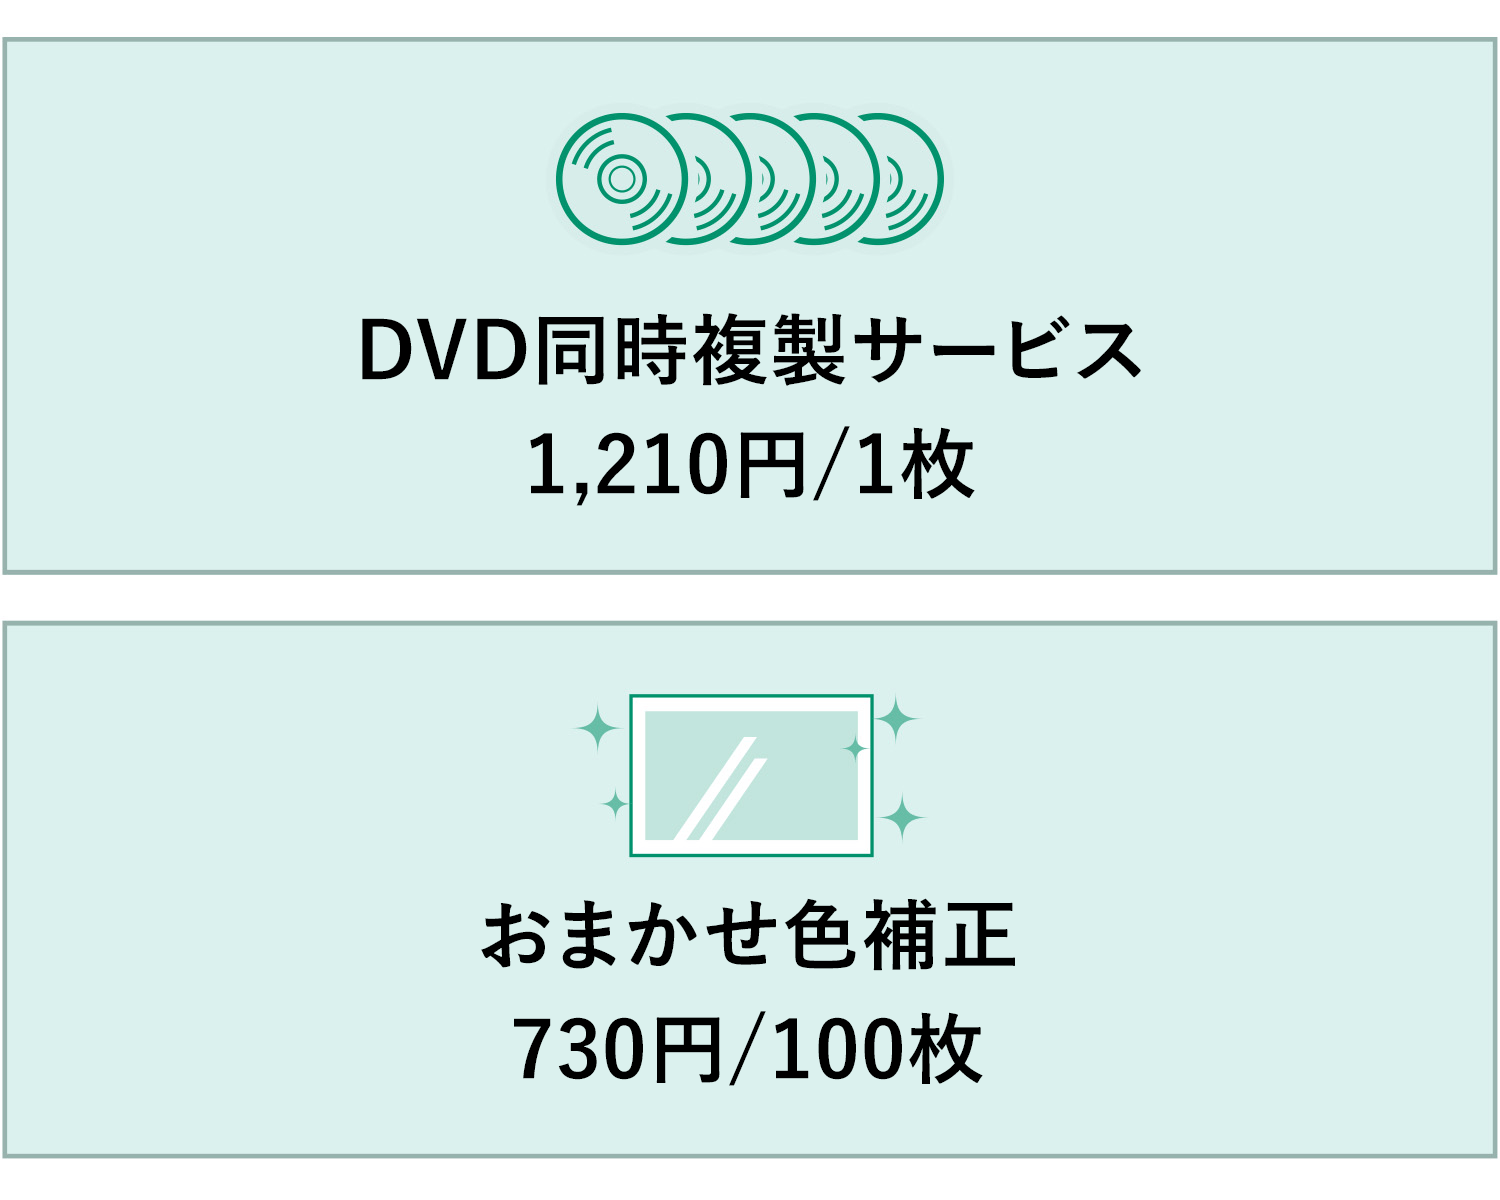 DVD同時複製サービス 1,210円/枚　おまかせ色補正 730円/100枚